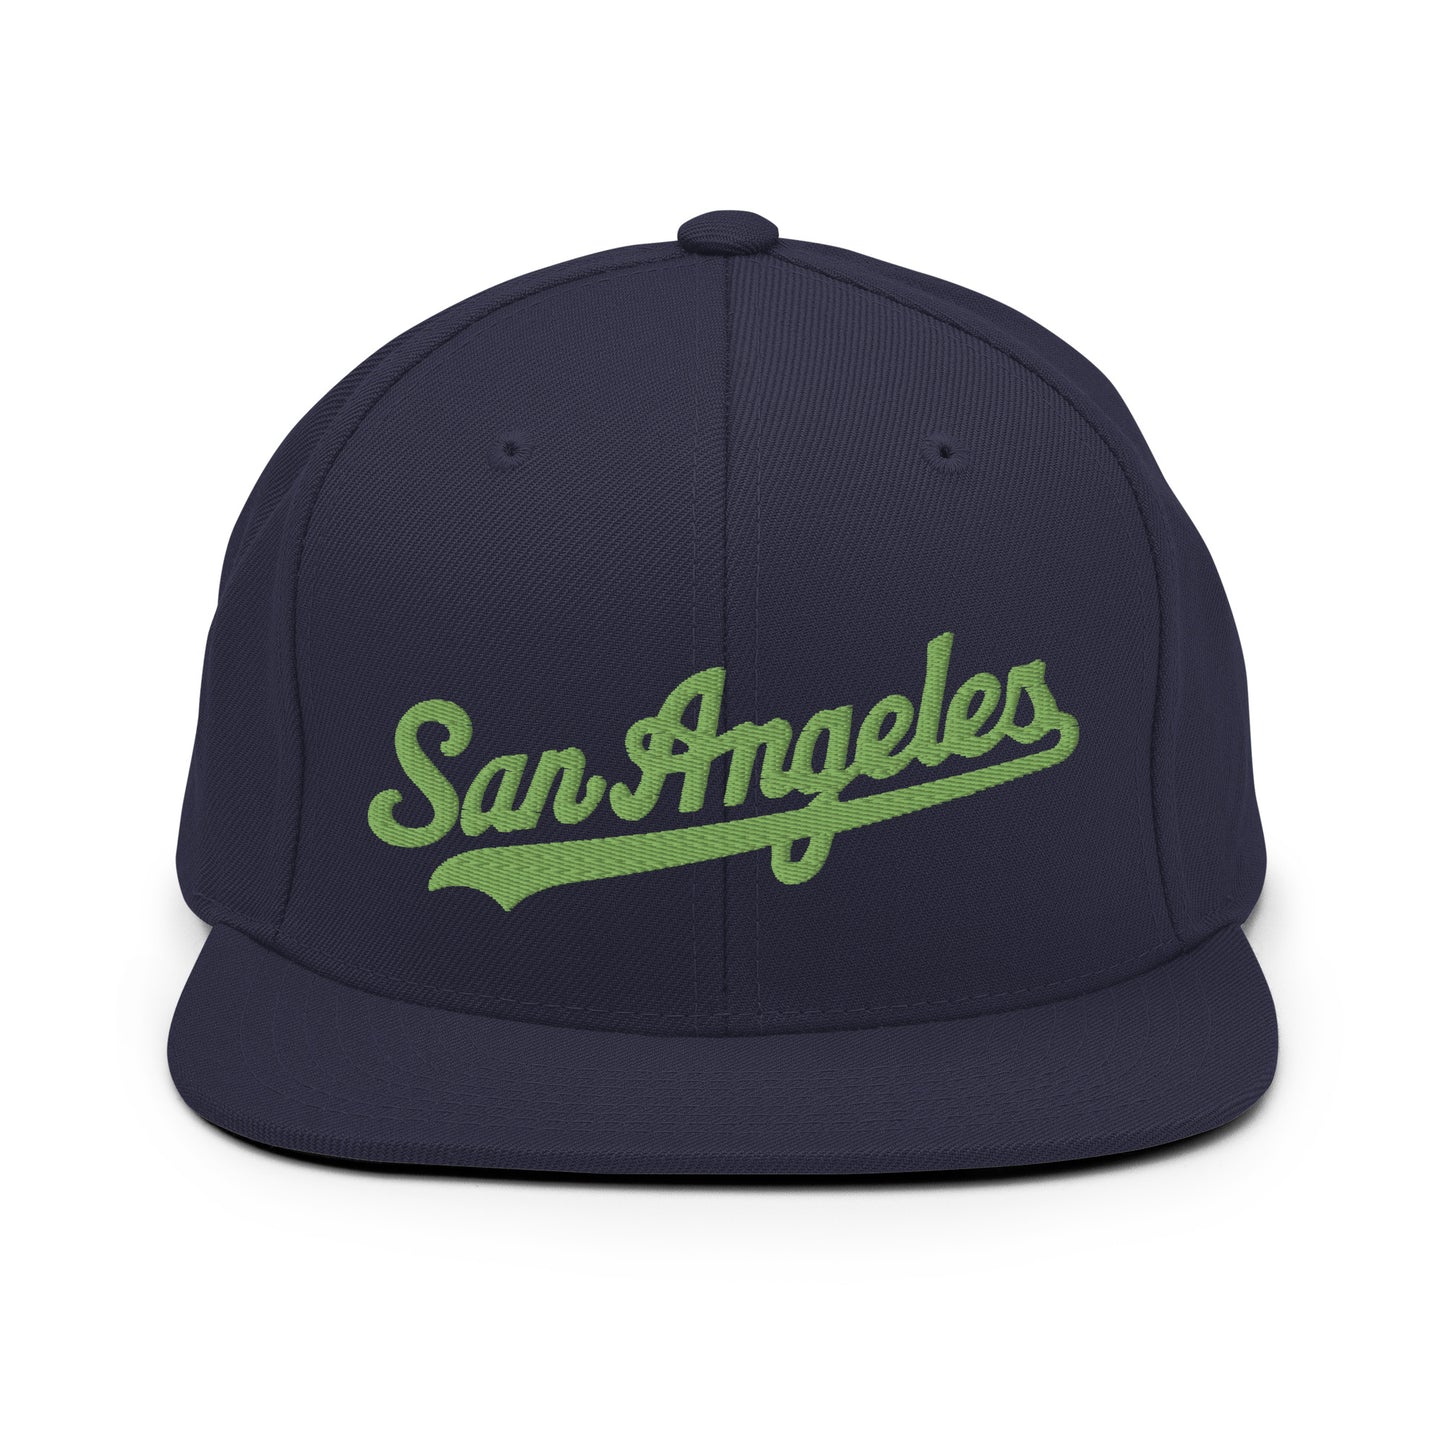 San Angeles Home Team snapback hat